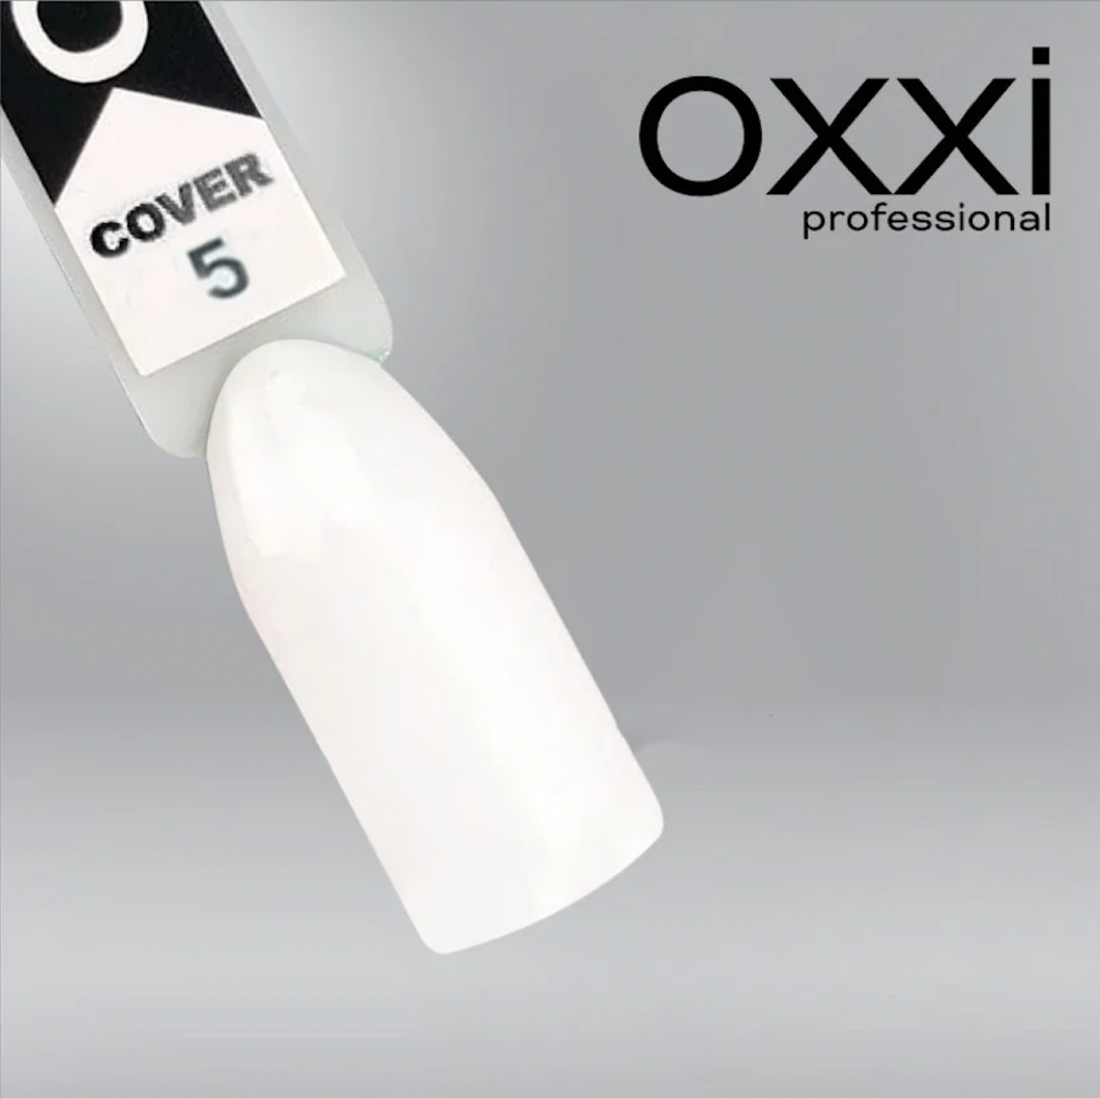 Камуфлирующая база для гель-лака Oxxi Professional Cover Base Coat 5 белая, 10мл